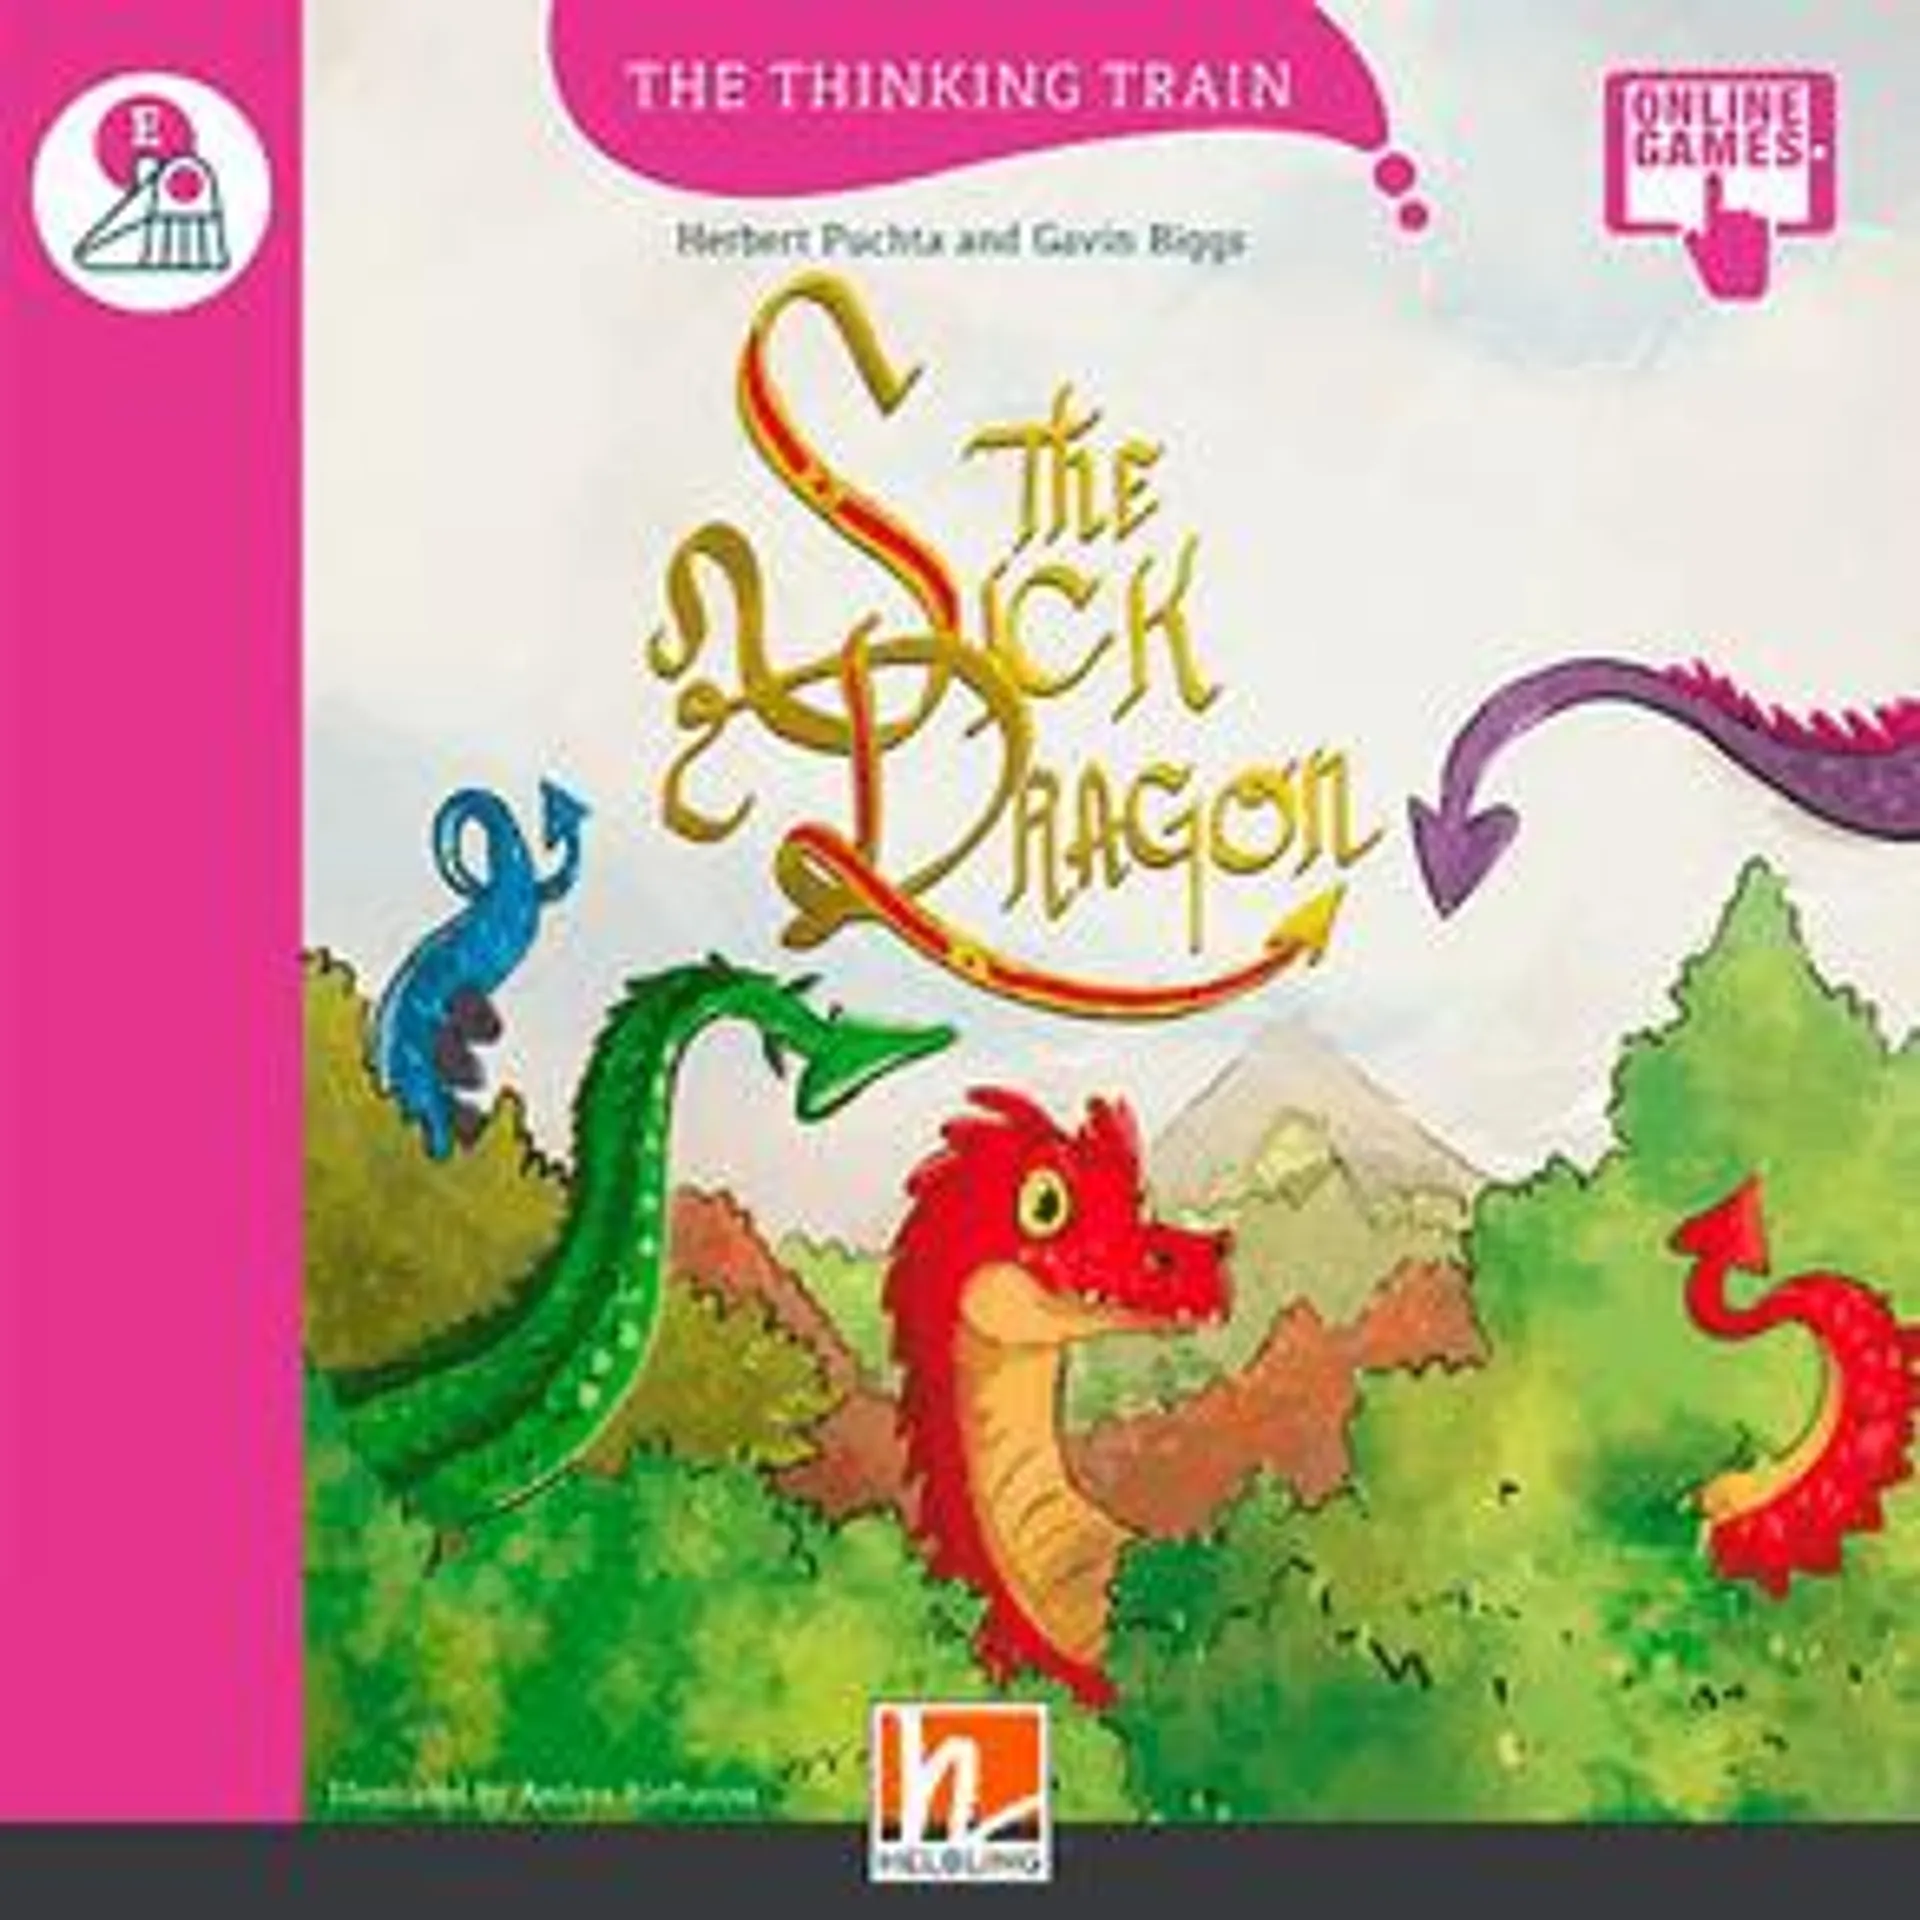 The Thinking Train Lvl E The sick dragon